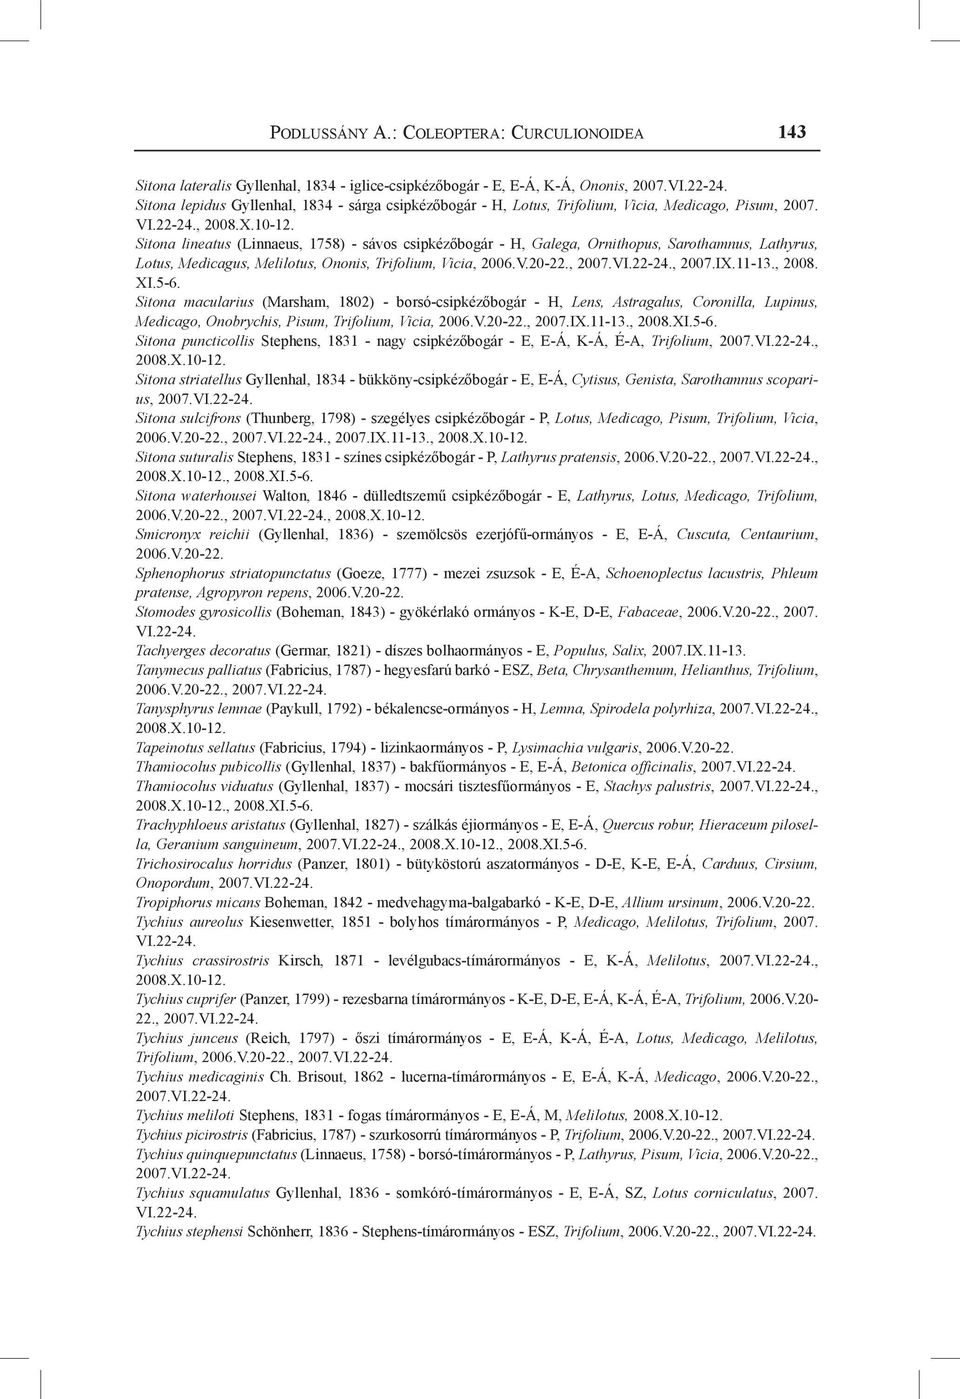 Medicago, Pisum, 2007., Sitona lineatus (Linnaeus, 1758) - sávos csipkézőbogár - H, Galega, Ornithopus, Sarothamnus, Lathyrus, Lotus, Medicagus, Melilotus, Ononis, Trifolium, Vicia,,, 2007.IX.11-13.